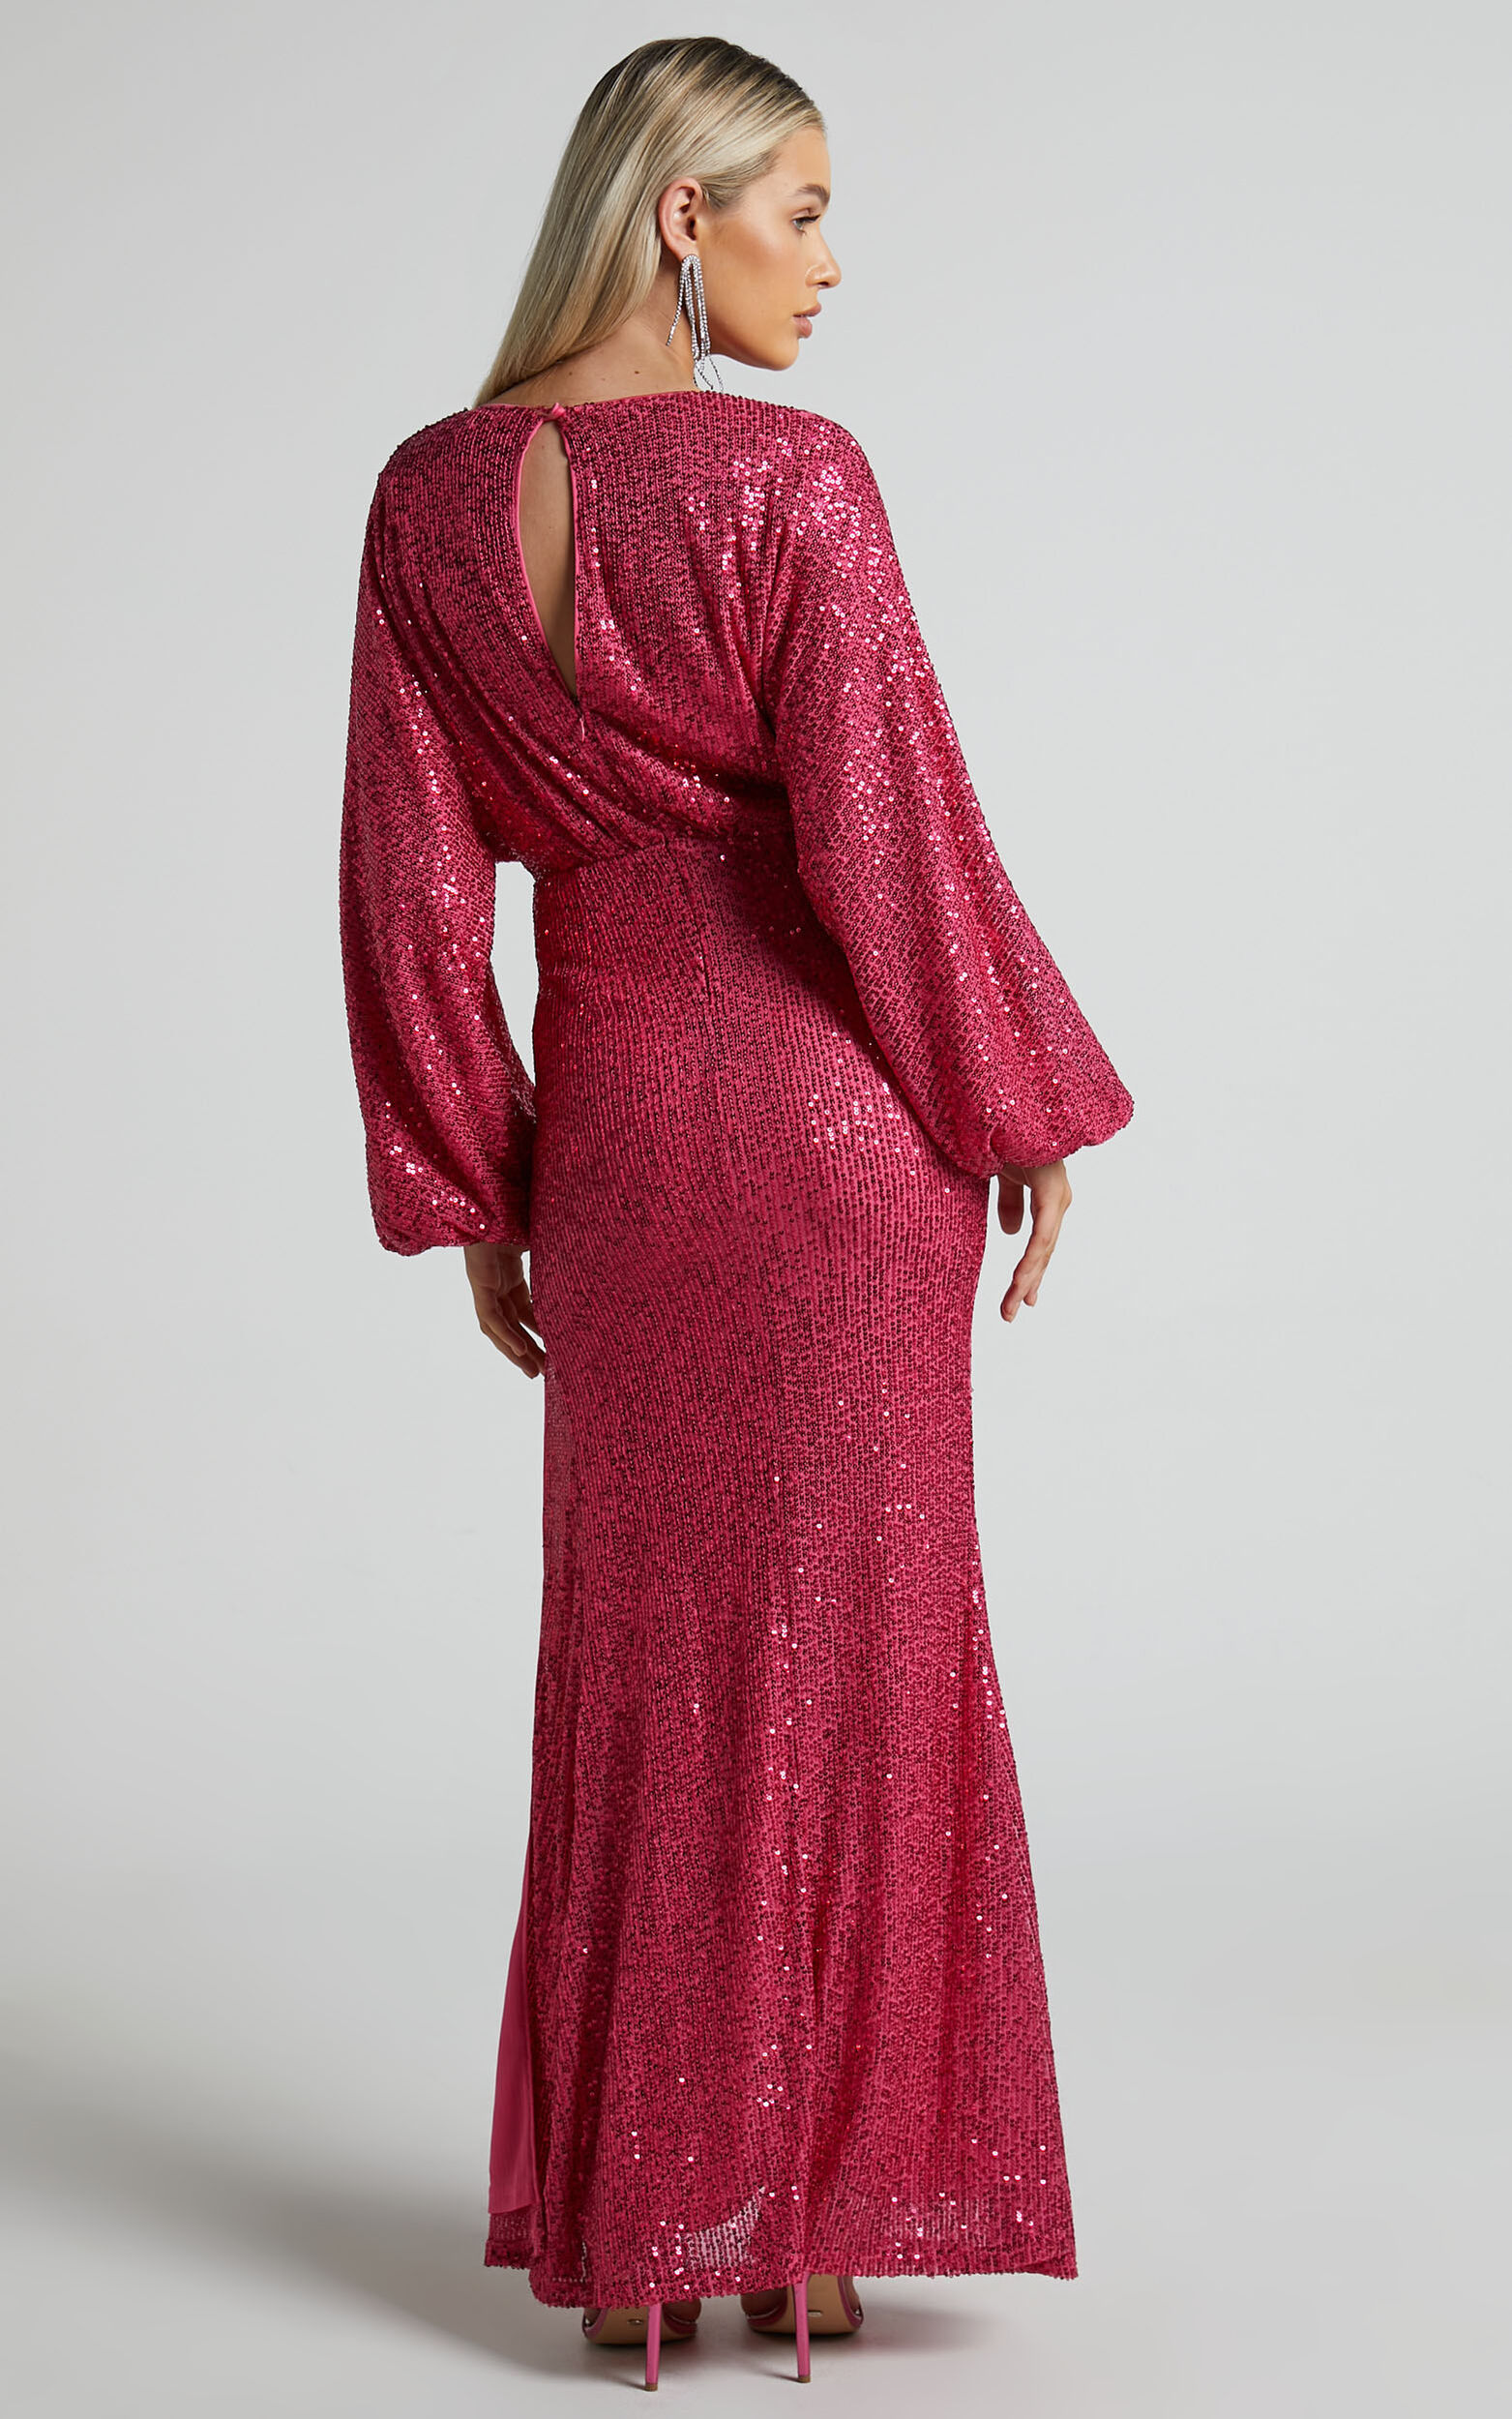 Arlington Midi Dress - Sequin Long Sleeve Dress in Hot Pink - Showpo Formal Dresses | Wedding Guest Dresses